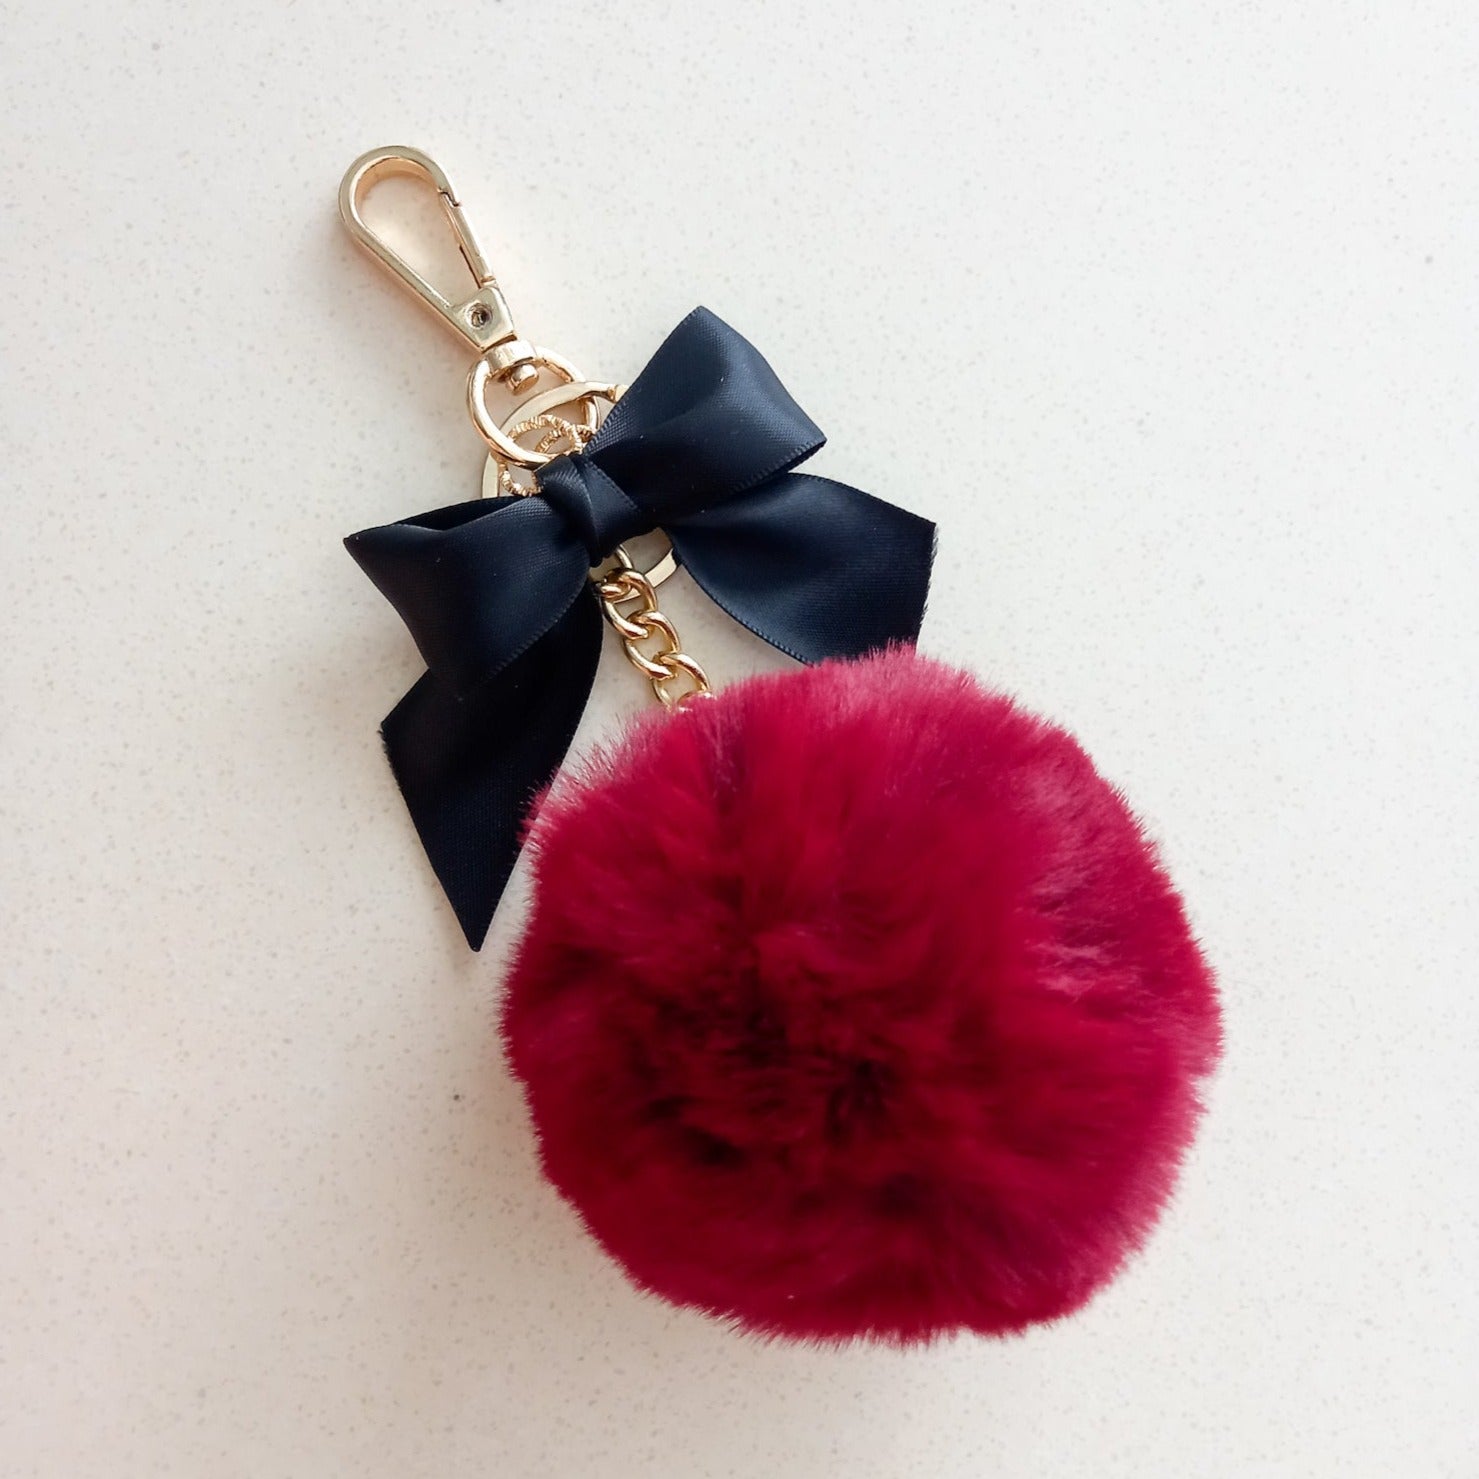 Corile 6Large Genuine Fur Pom Pom Keychain Puff Ball Car Keyring / Bag Purse Charm (Burgundy)